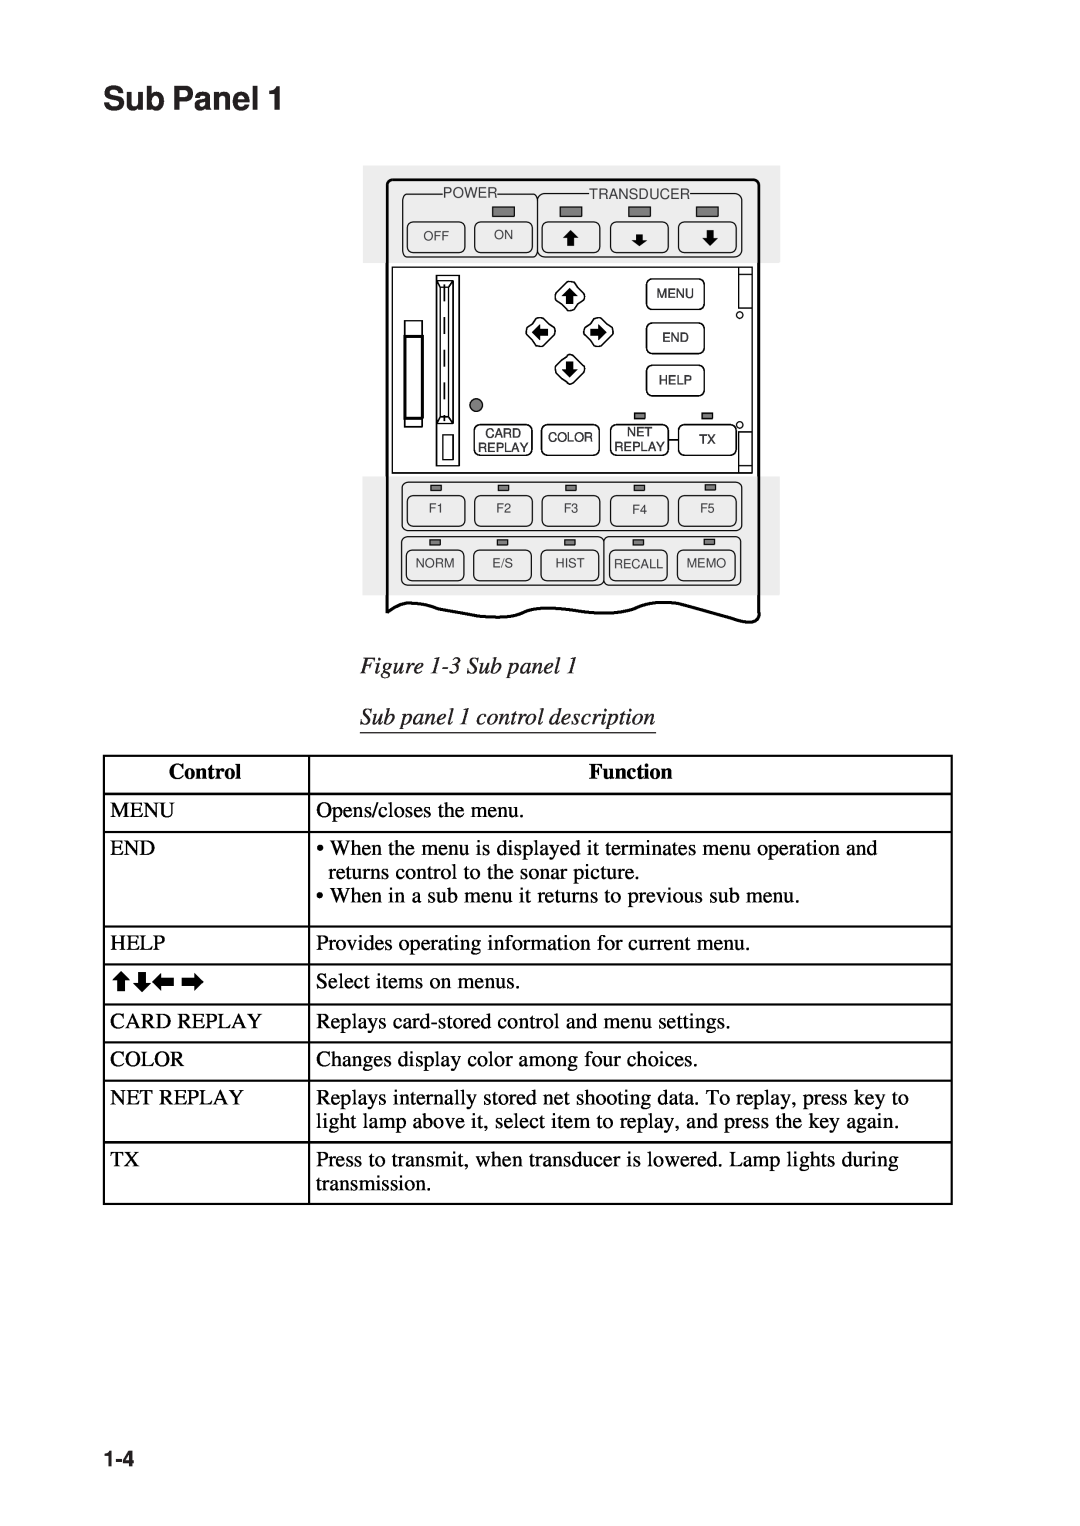 Furuno CSH-53 manual Sub Panel, 3 Sub panel Sub panel 1 control description, Control, Function 